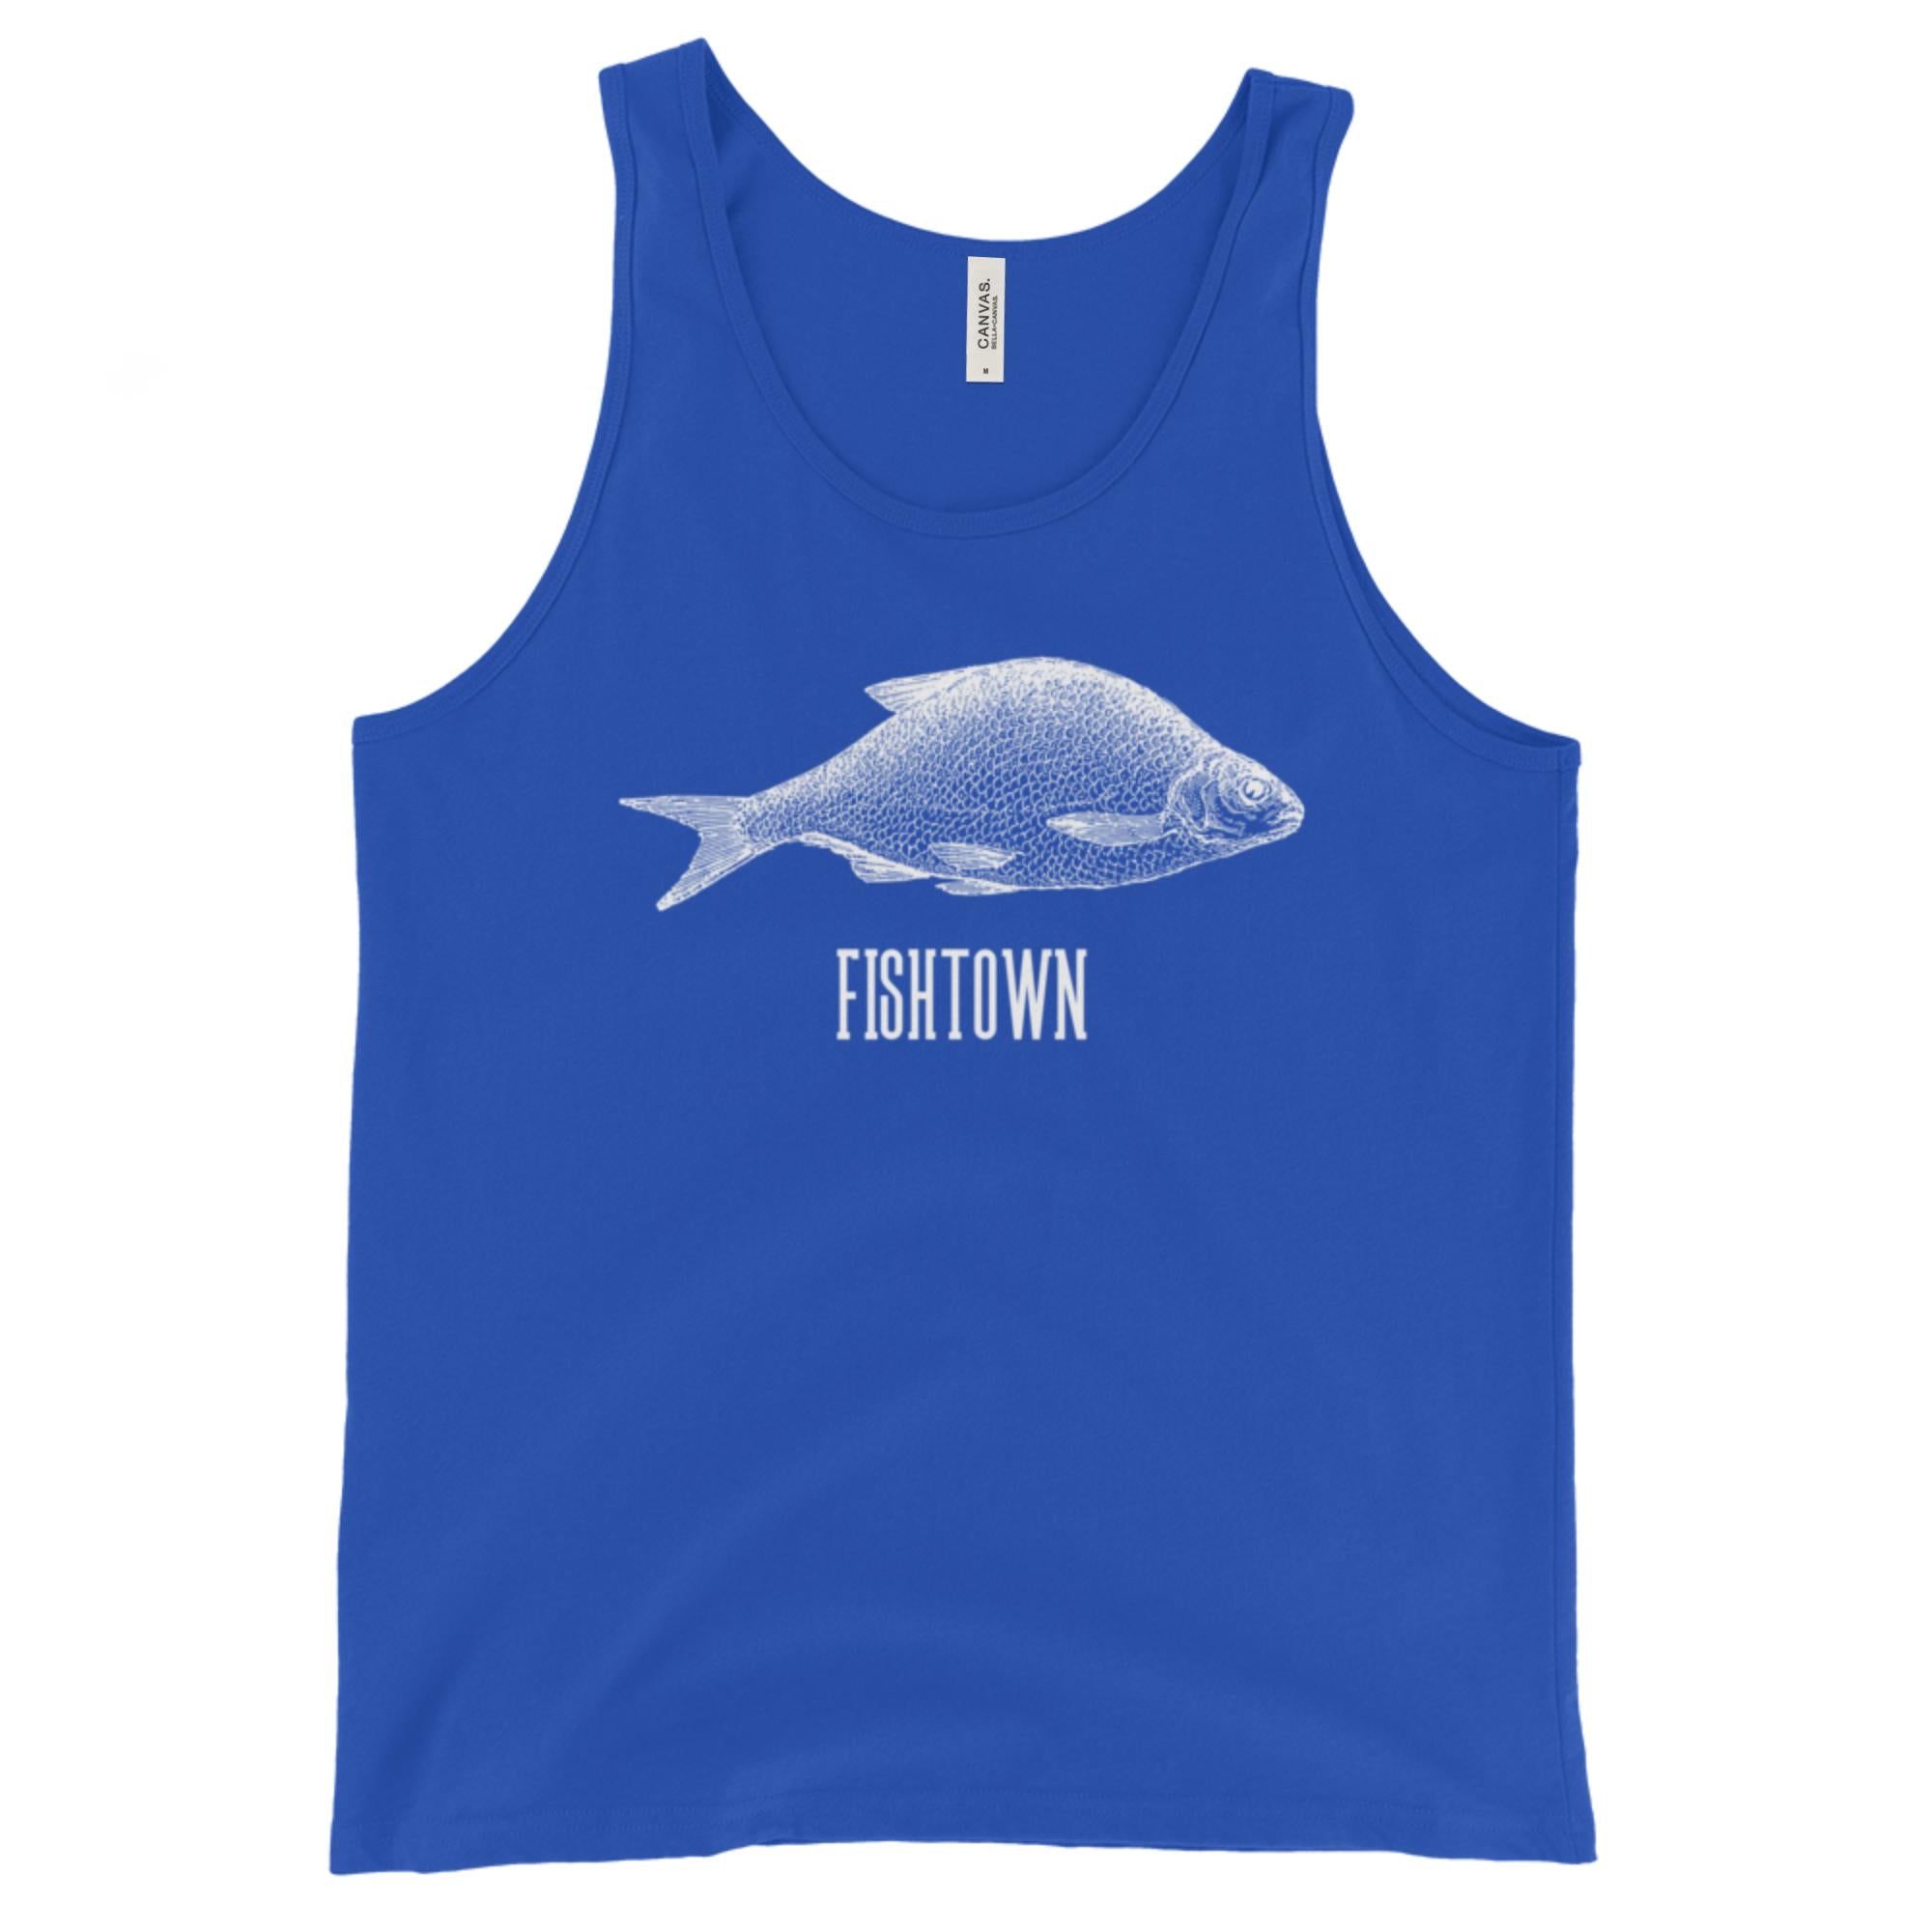 "Fishtown" Tank Top